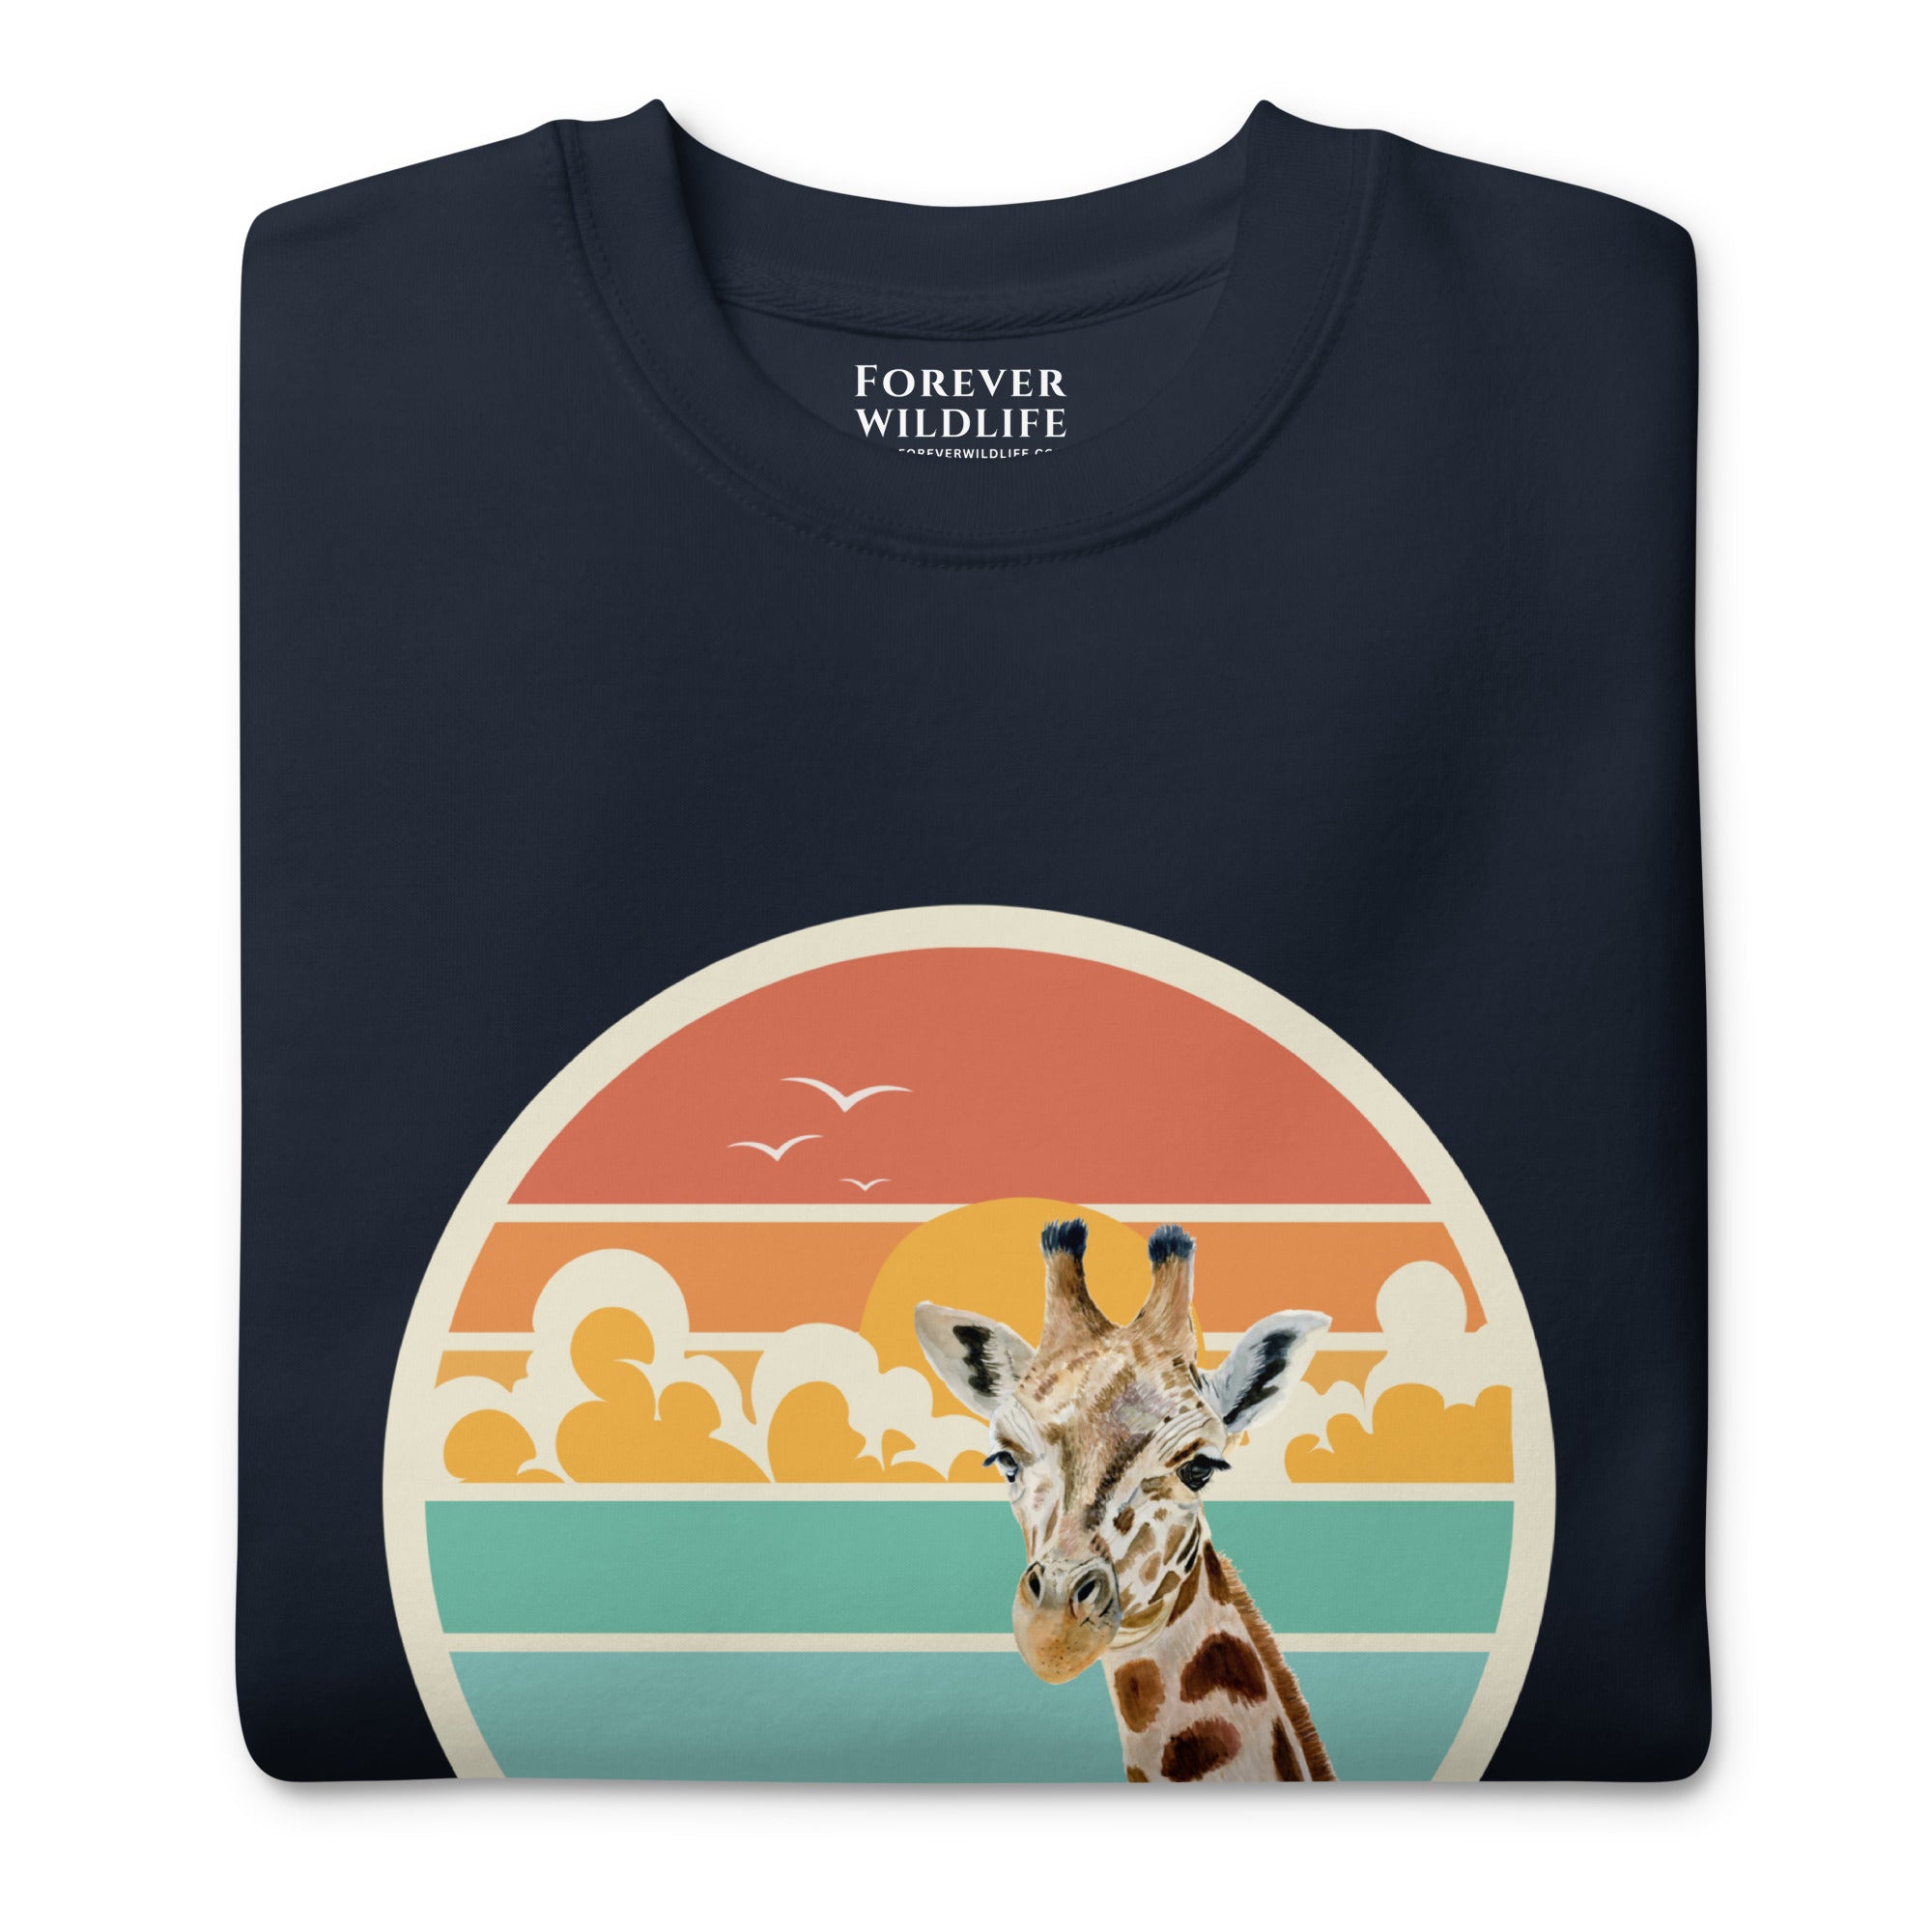 Giraffe Sweatshirt in Navy-Premium Wildlife Animal Inspiration Sweatshirt Design, part of Wildlife Sweatshirts & Clothing from Forever Wildlife.